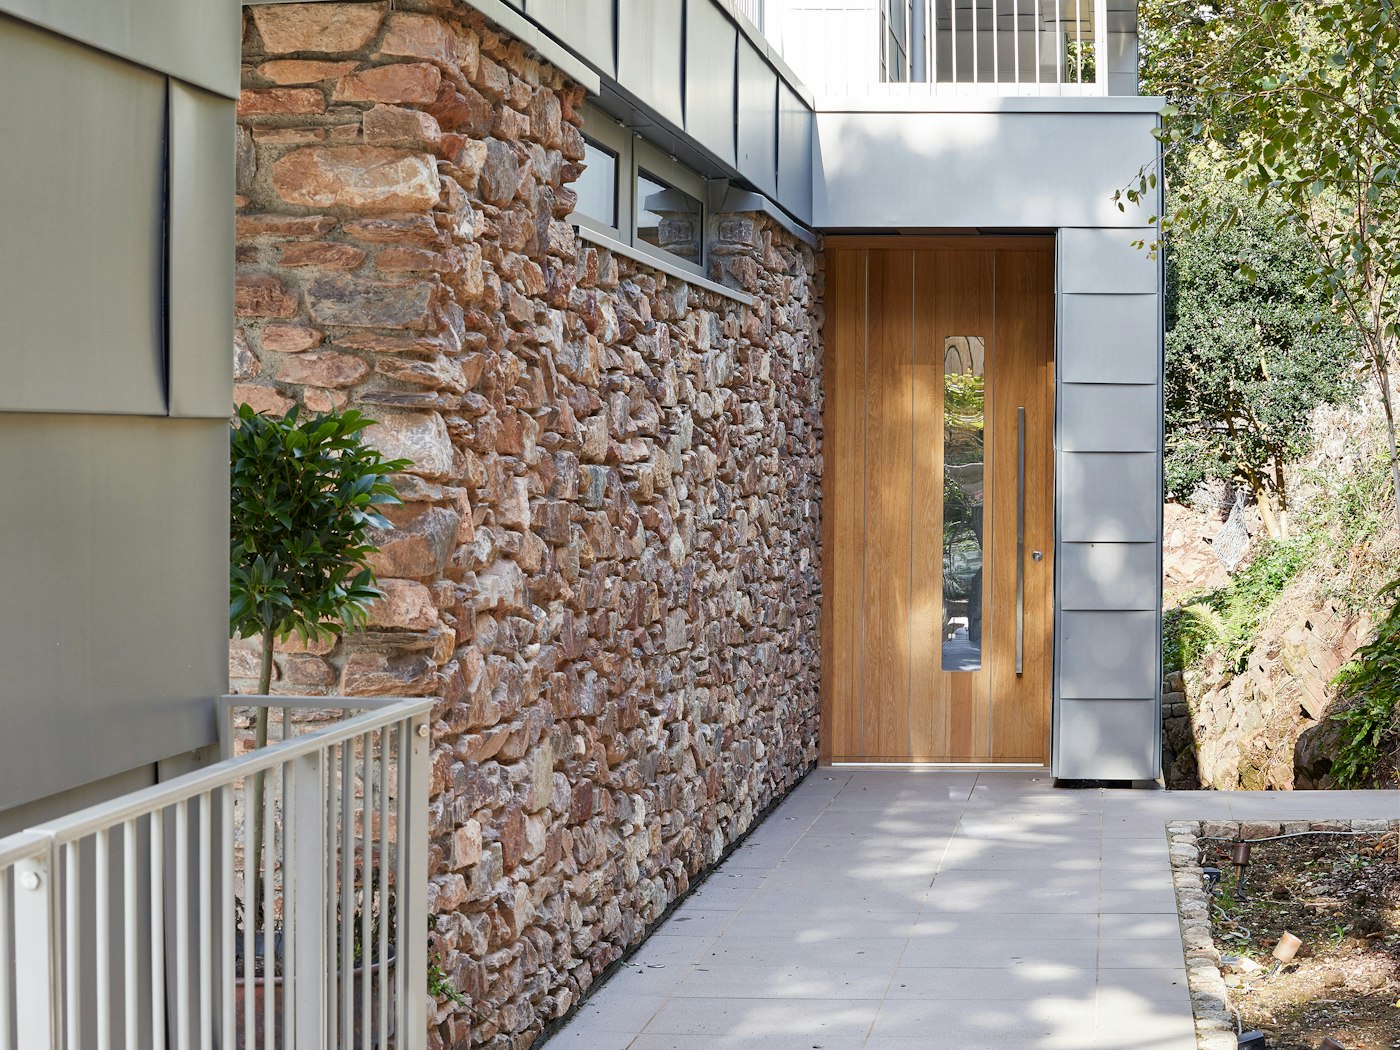 The Urban Front europan oak front door is framed by stone & zinc